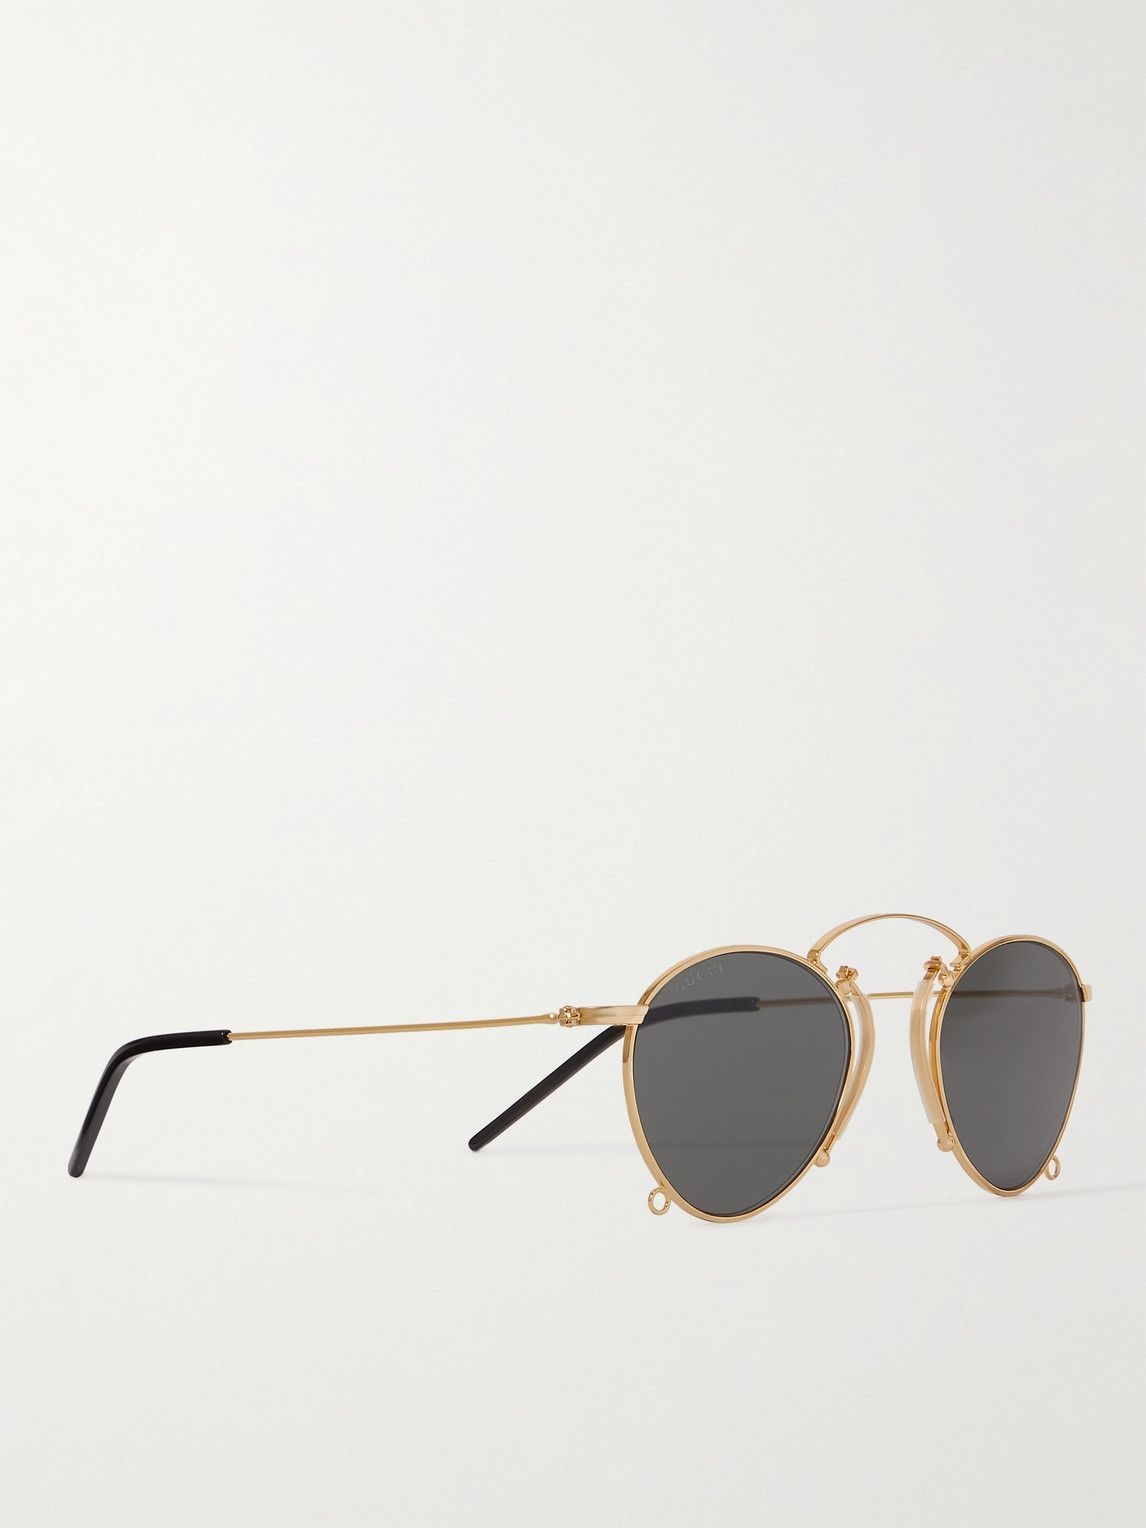 Gucci Eyewear - Round-Frame Gold-Tone Sunglasses Gucci